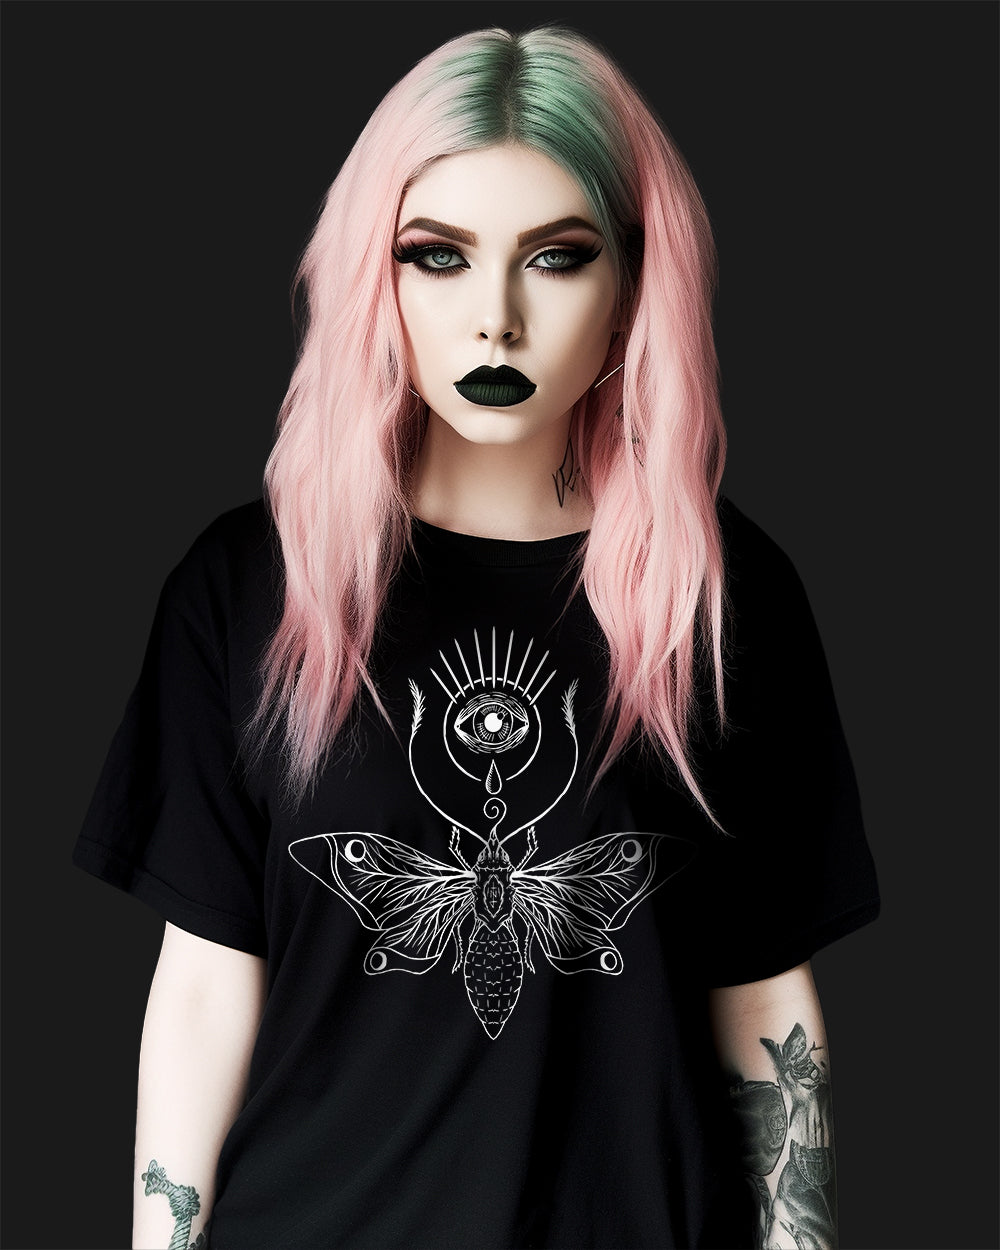 Sacred Moth Tee - Unisex Vegan Gothic Clothing - Alternative Occult Ethical Fashion - On Demand Eco-friendly Sustainable Product